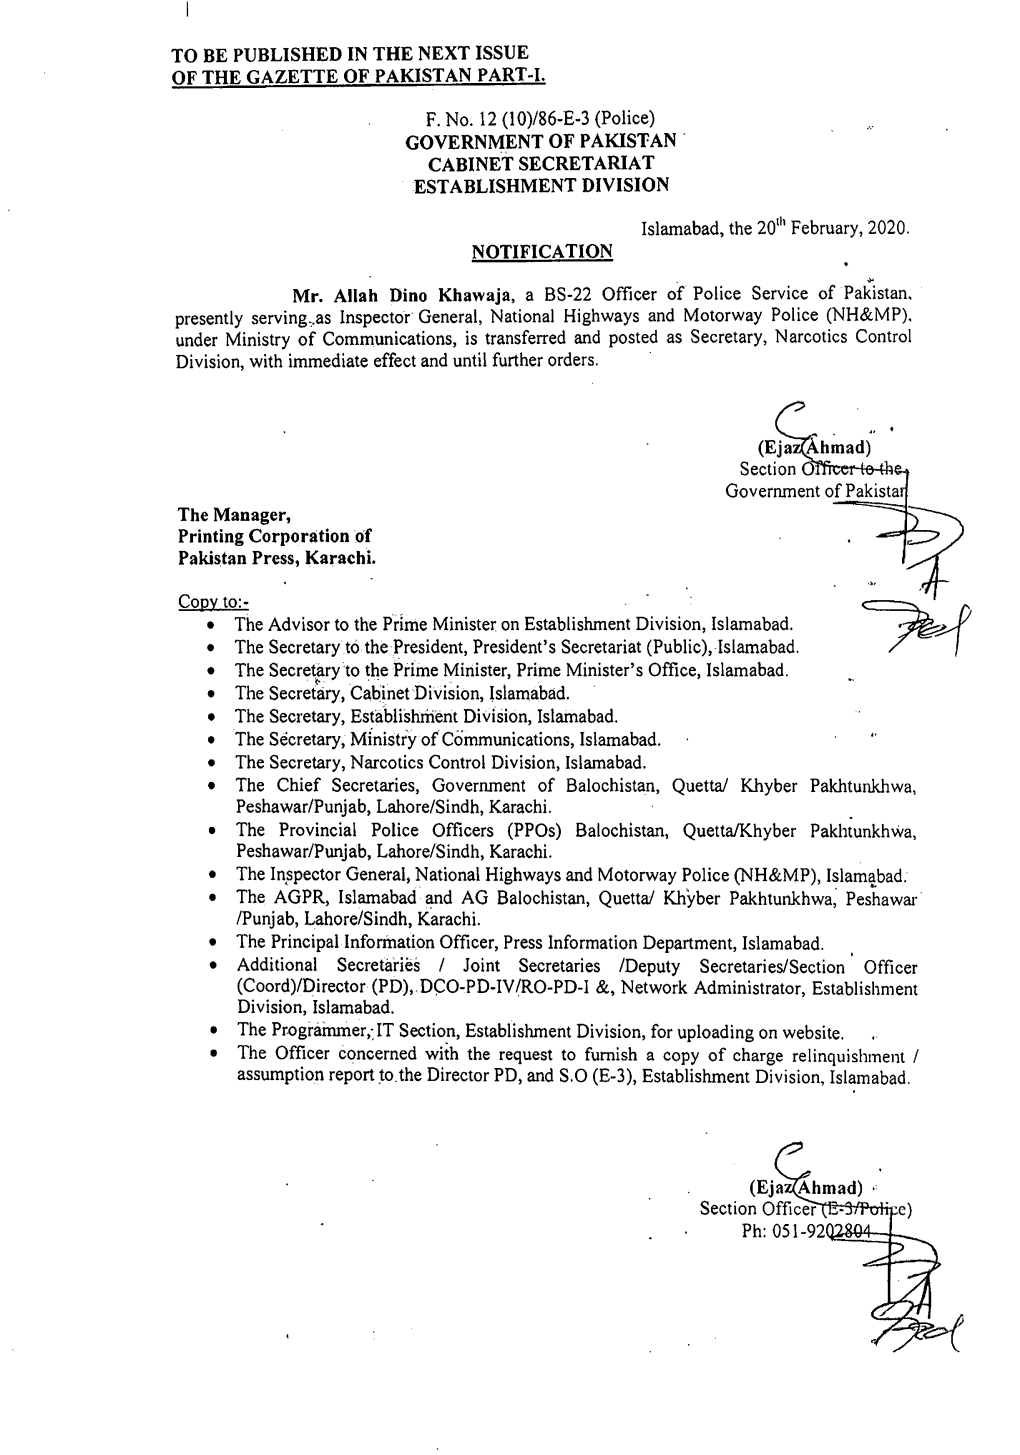 Police) GOVERNMENT of PAKISTAN CABINET SECRETARIAT ESTABLISHMENT DIVISION 20Th Islamabad, the February, 2020